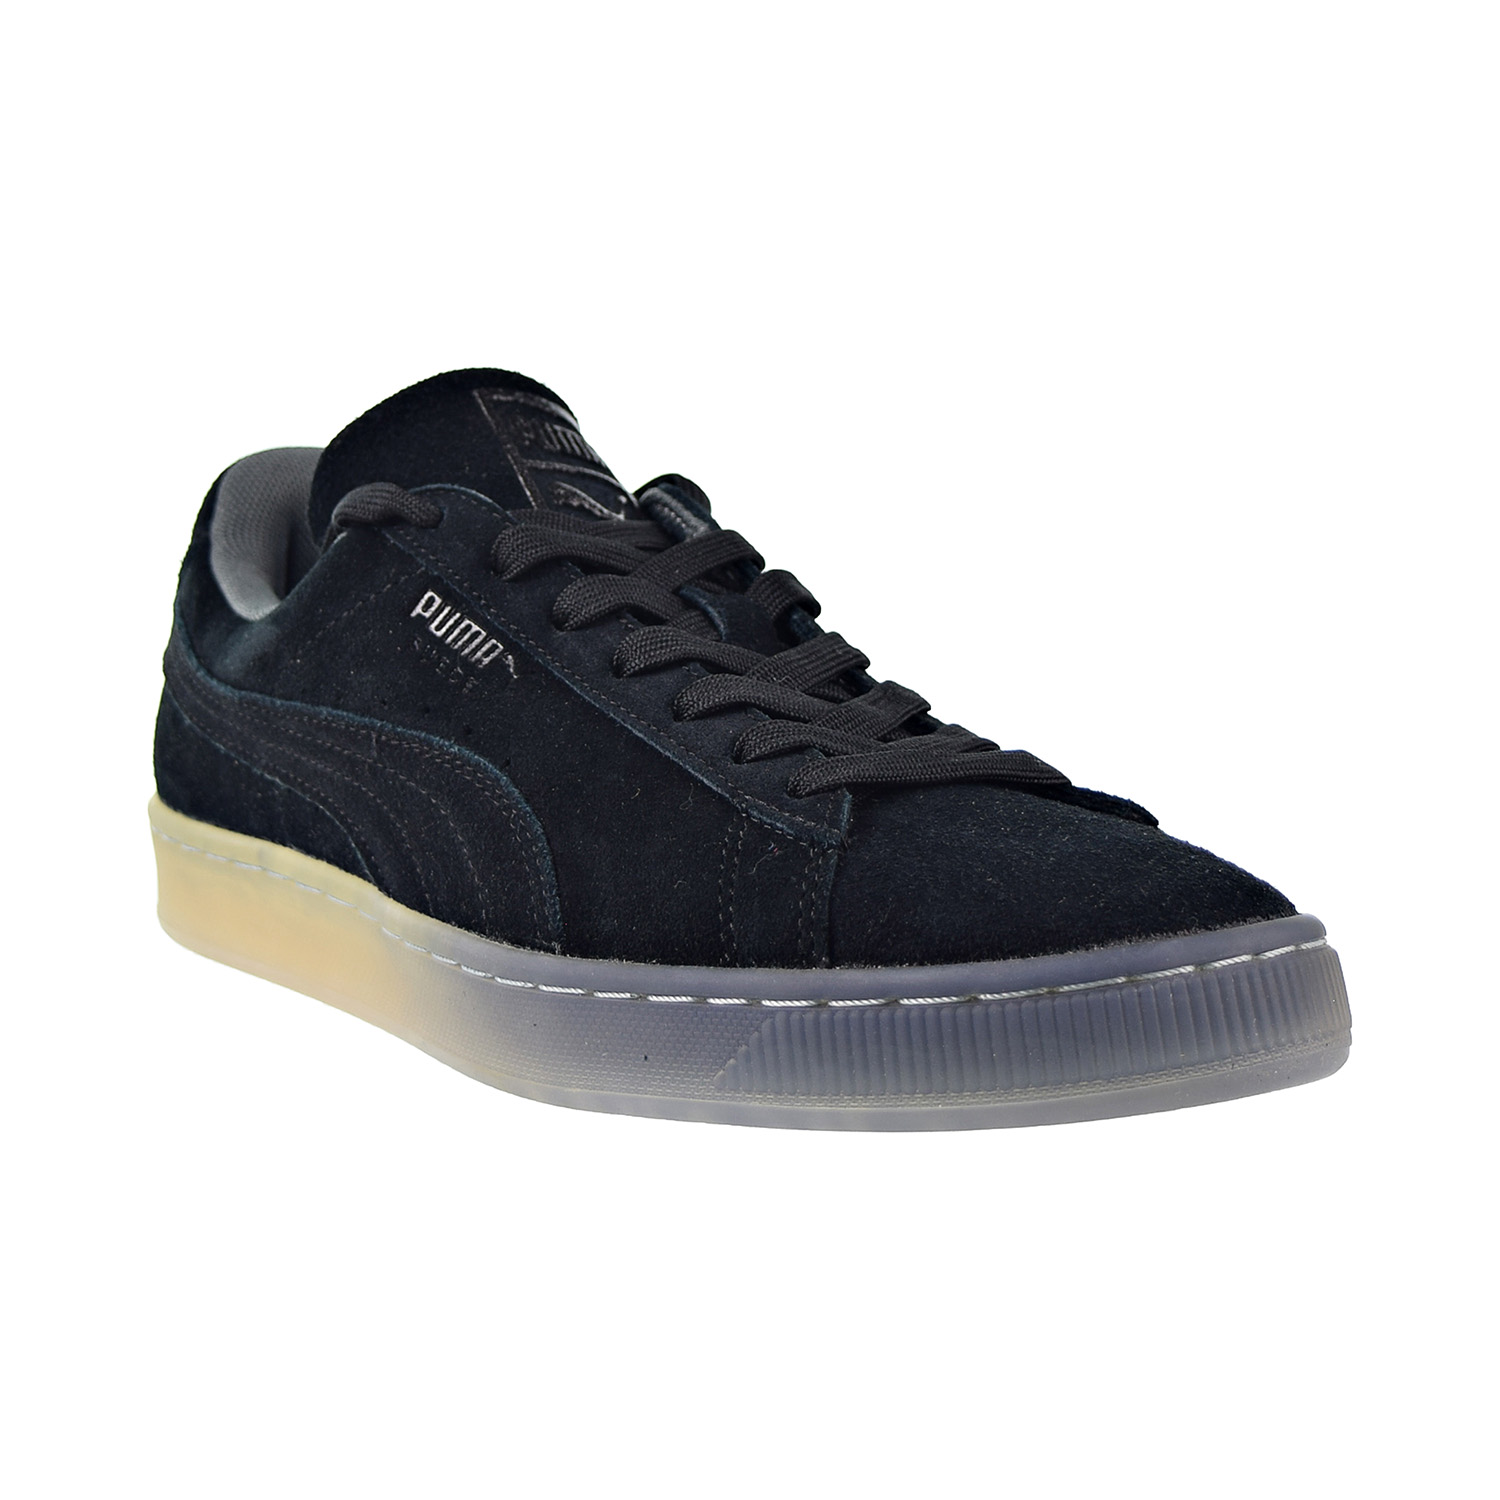 Puma Suede Classic Fade Future Men's Shoes Black 361351-02 - image 2 of 6